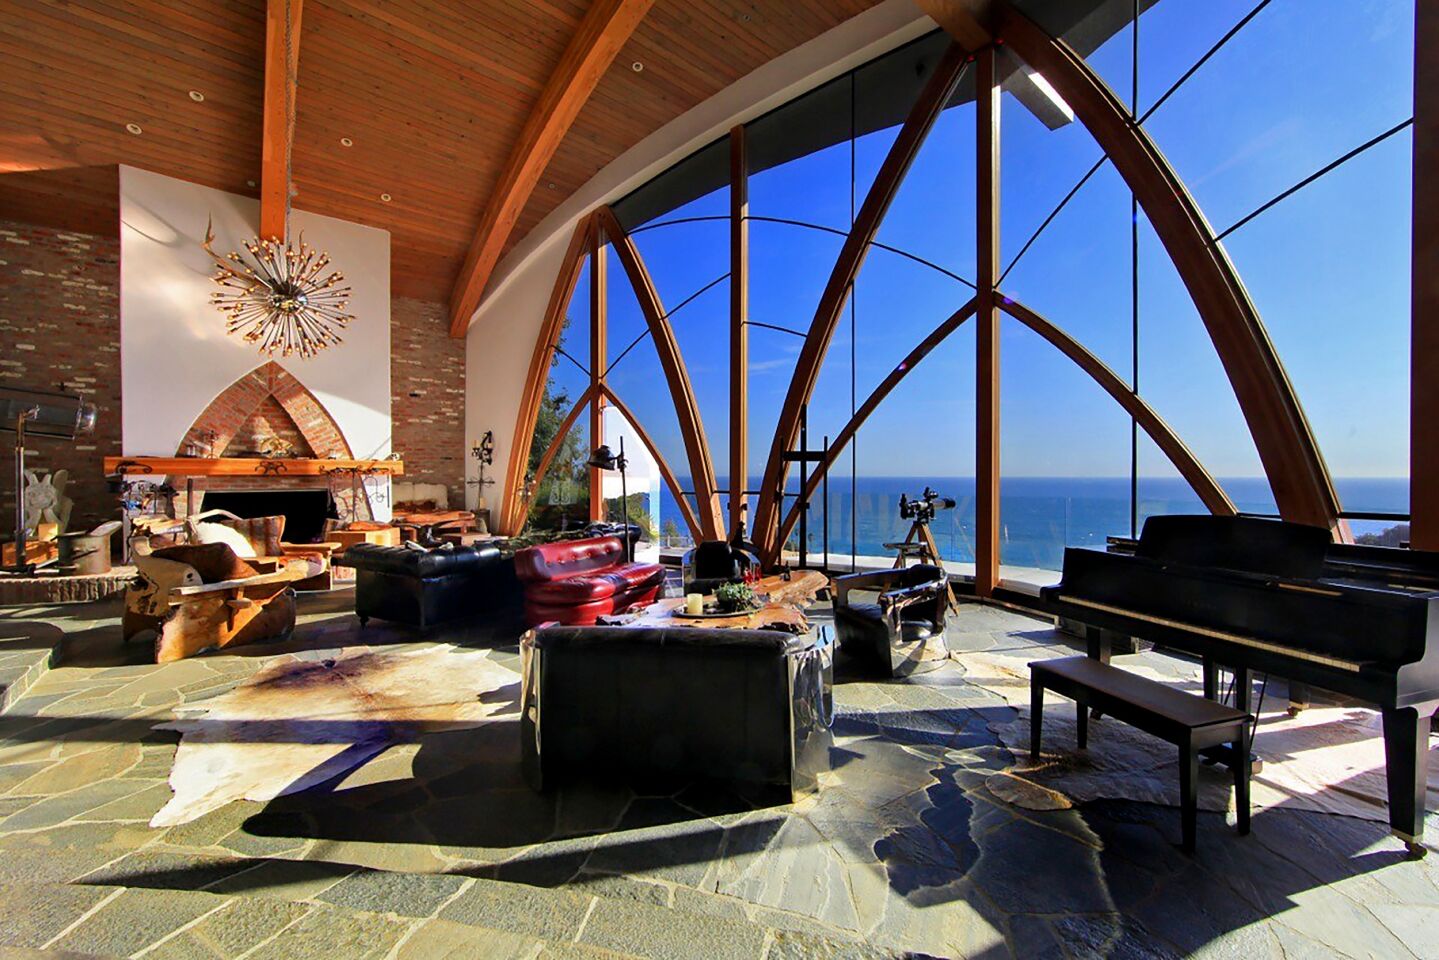 Listed for $14 million, the modernist residence takes in commanding ocean views.